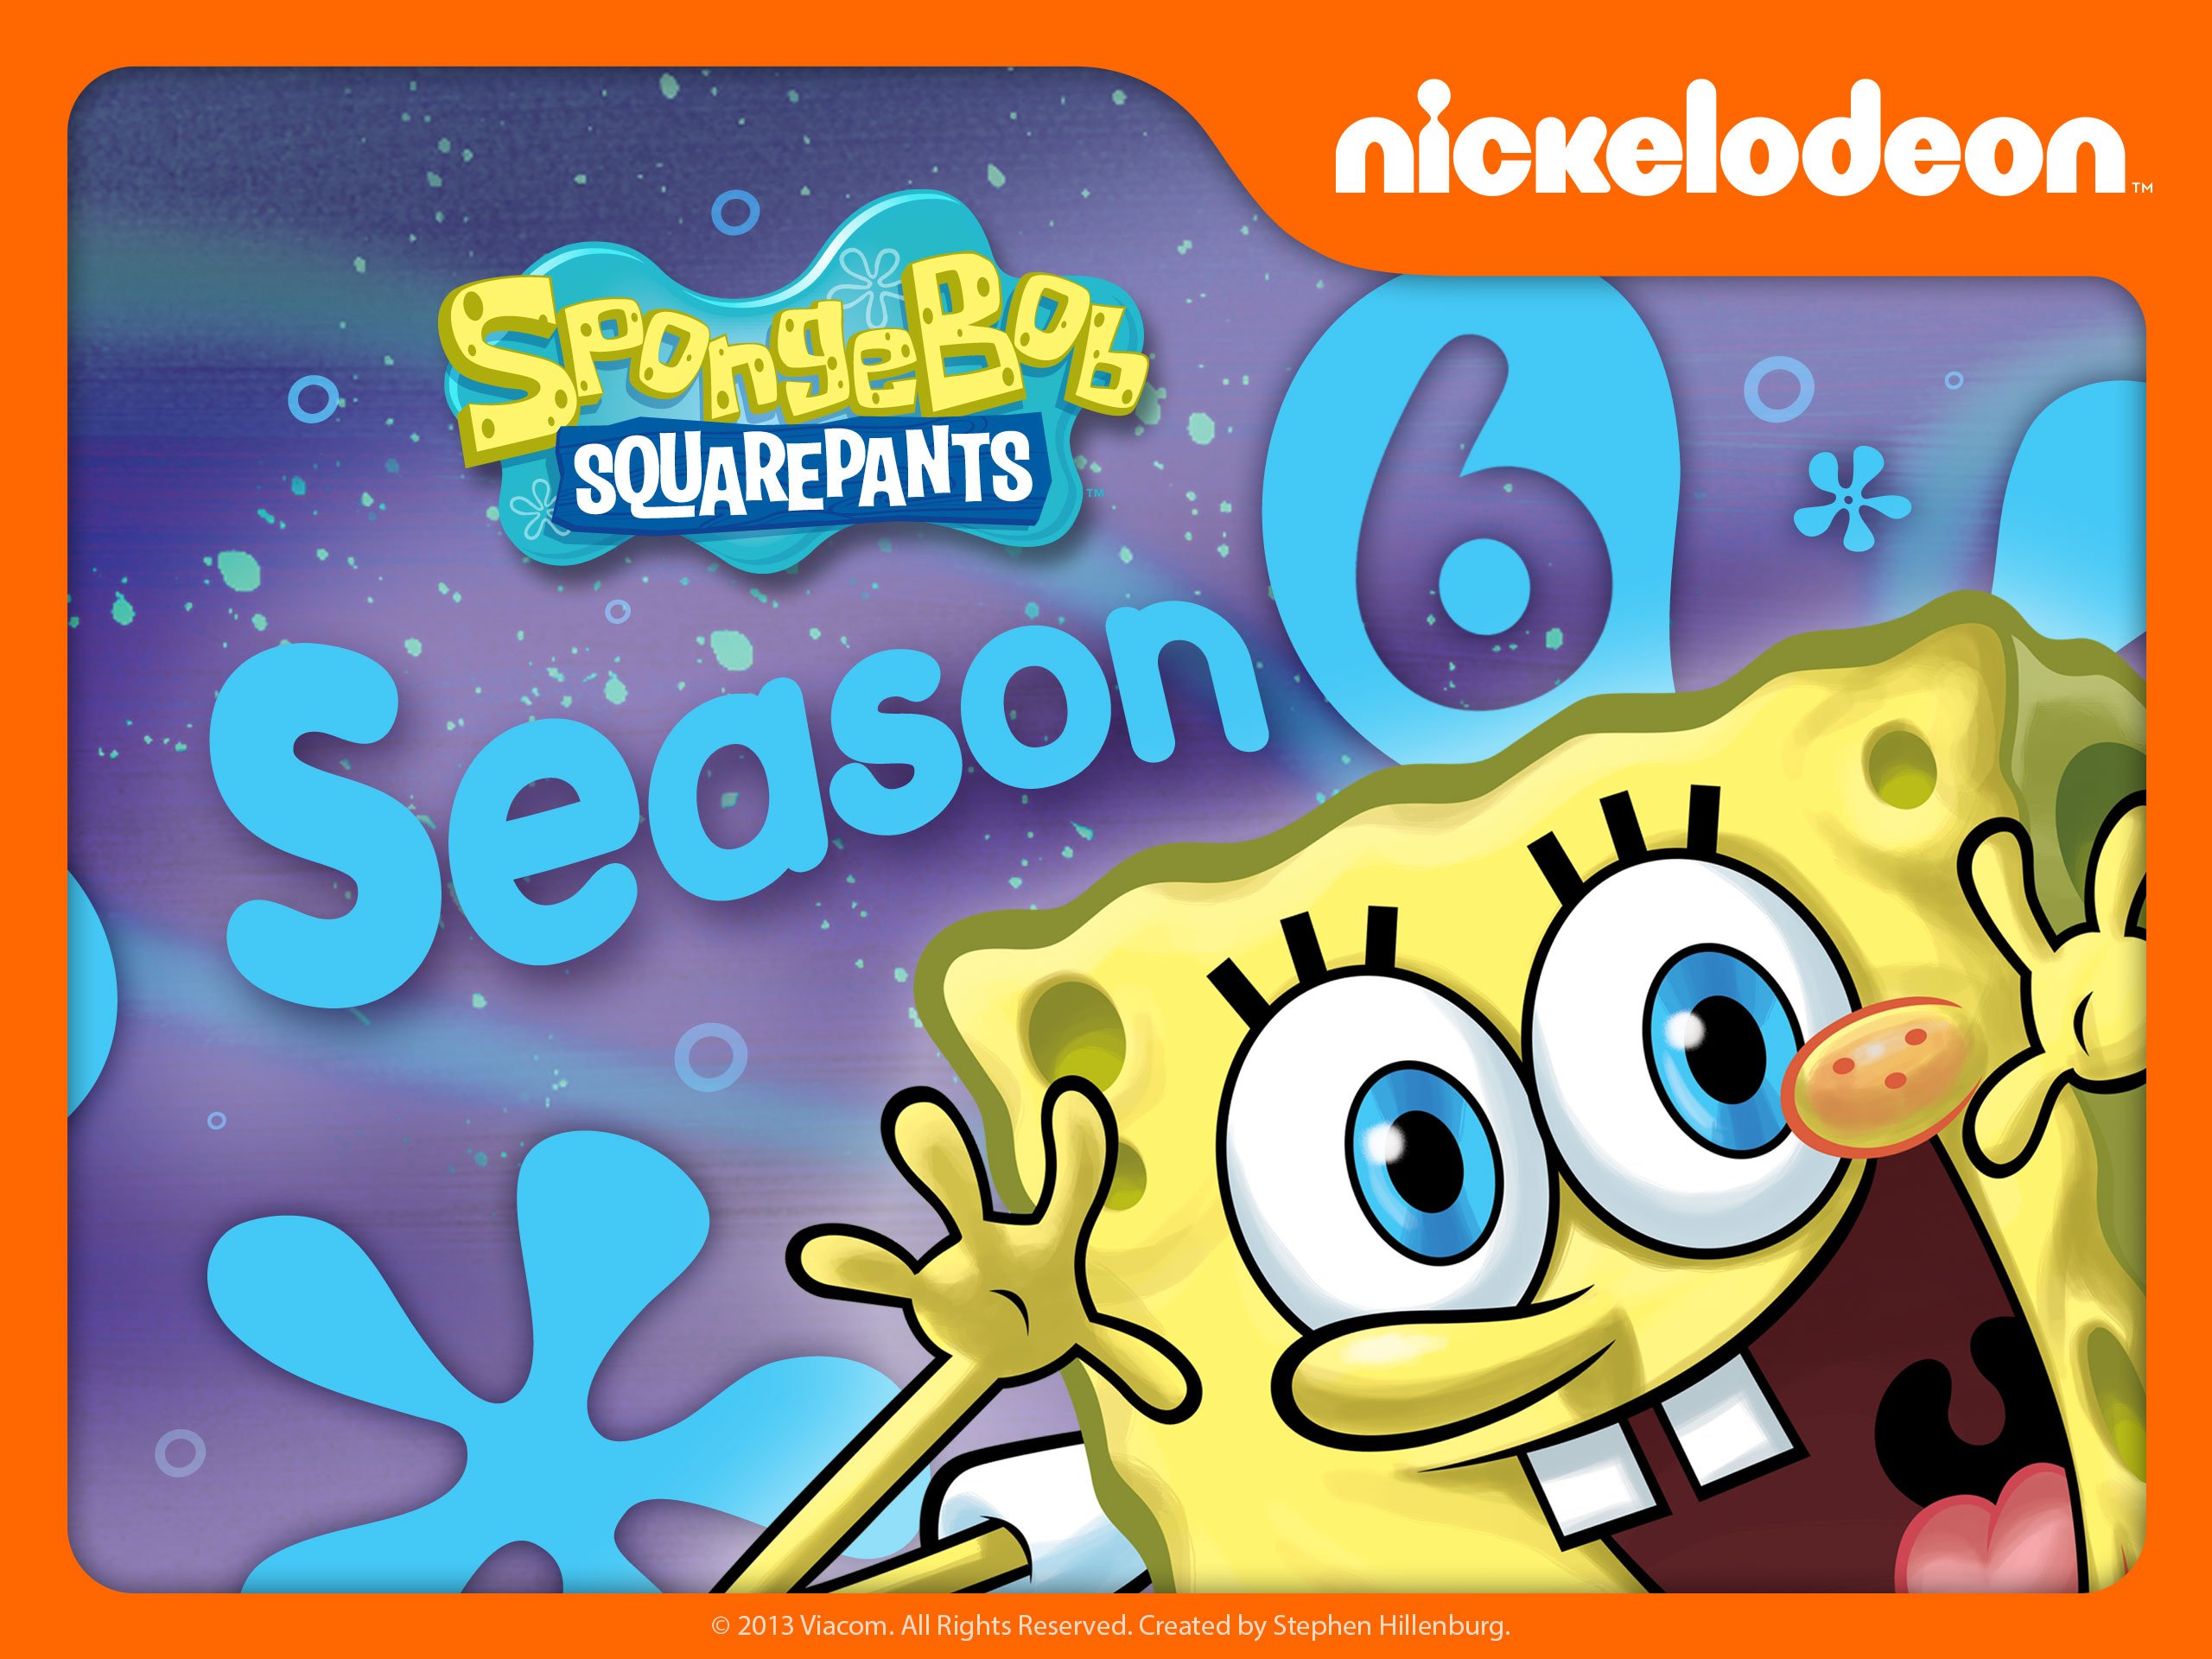 SpongeBob SquarePants (season 2) - Wikipedia